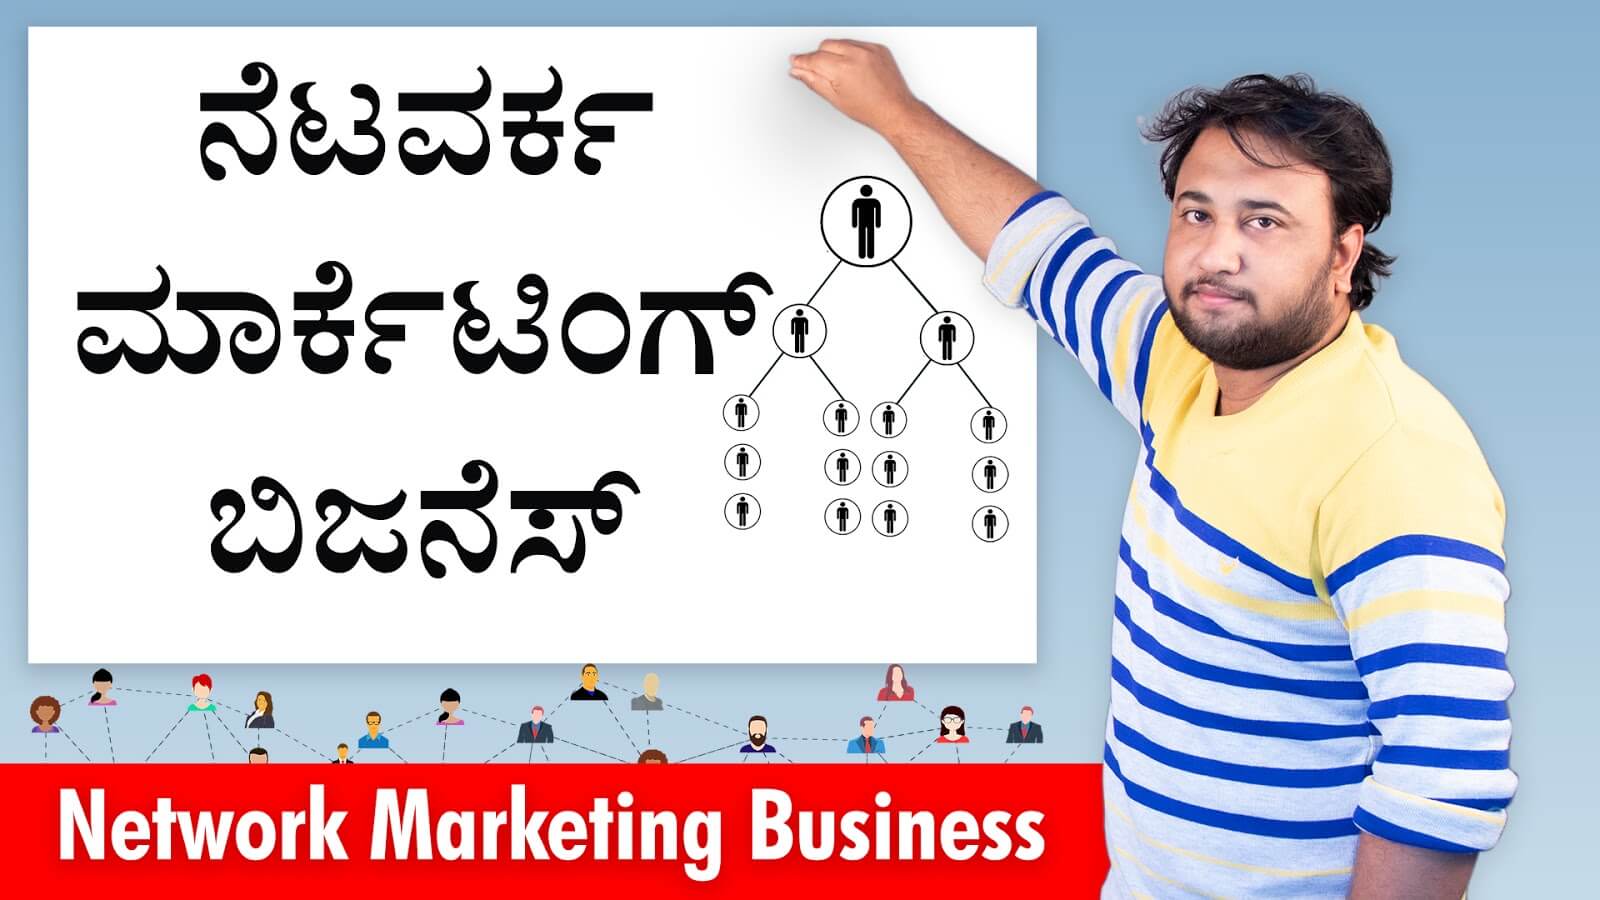 You are currently viewing ನೆಟವರ್ಕ ಮಾರ್ಕೆಟಿಂಗ್ ಬಿಜನೆಸ್ : Network Marketing Business in Kannada